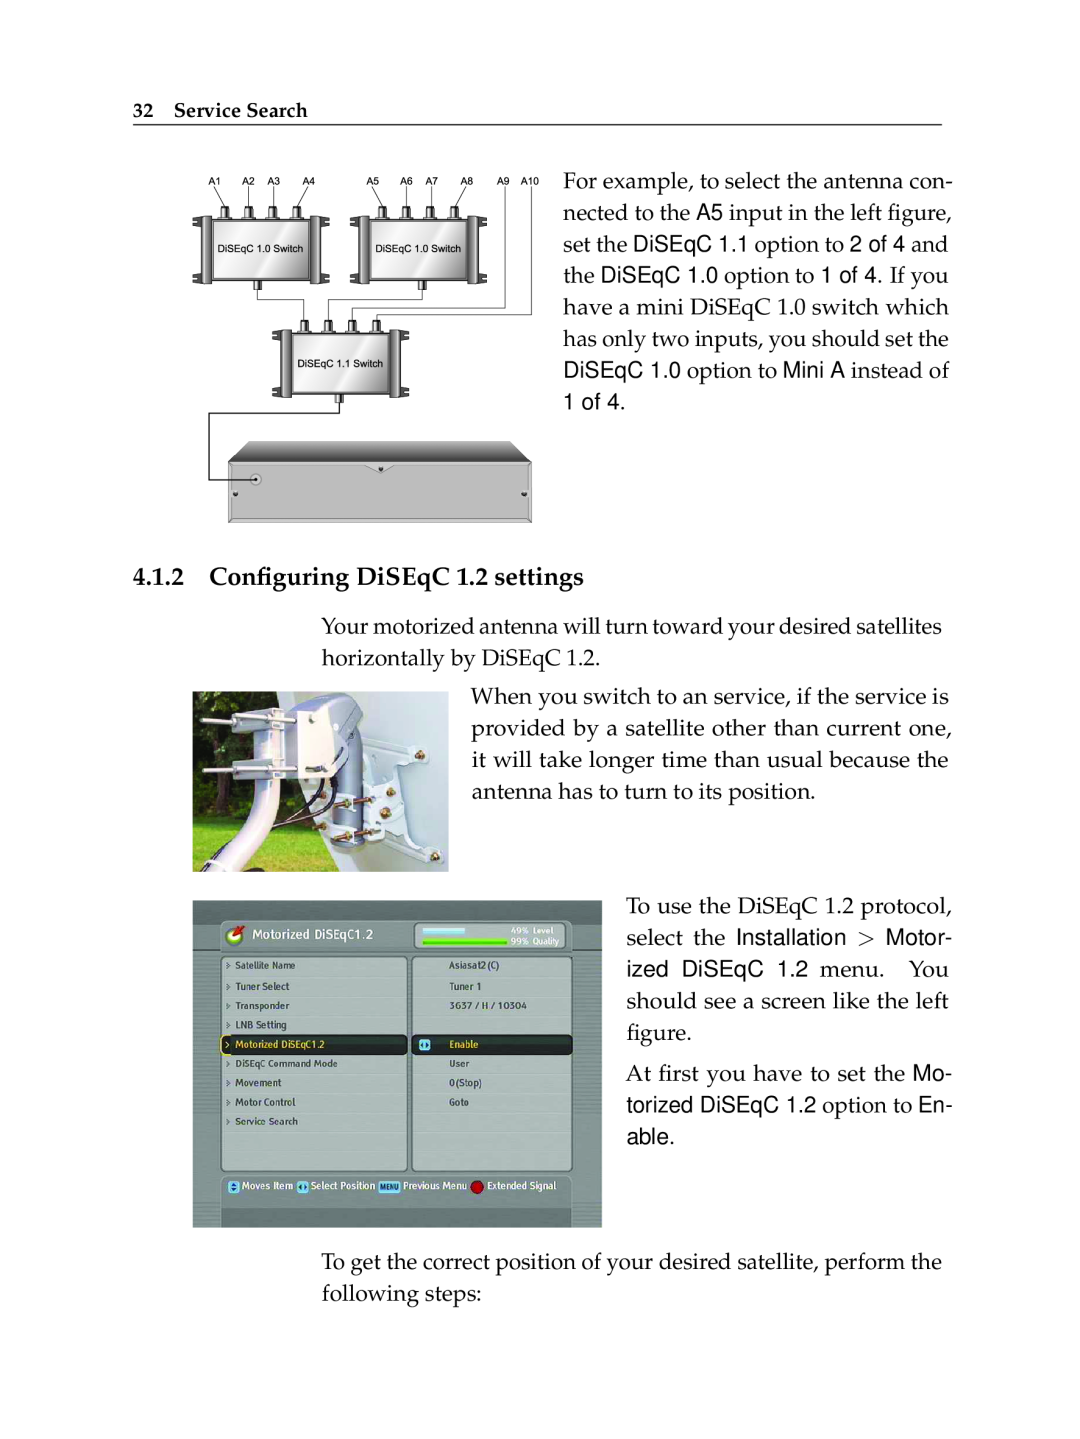 Topfield High Definition Digital Satellite Receiver Personal Video Recorder manual 4.1.2 Conﬁguring DiSEqC 1.2 settings 